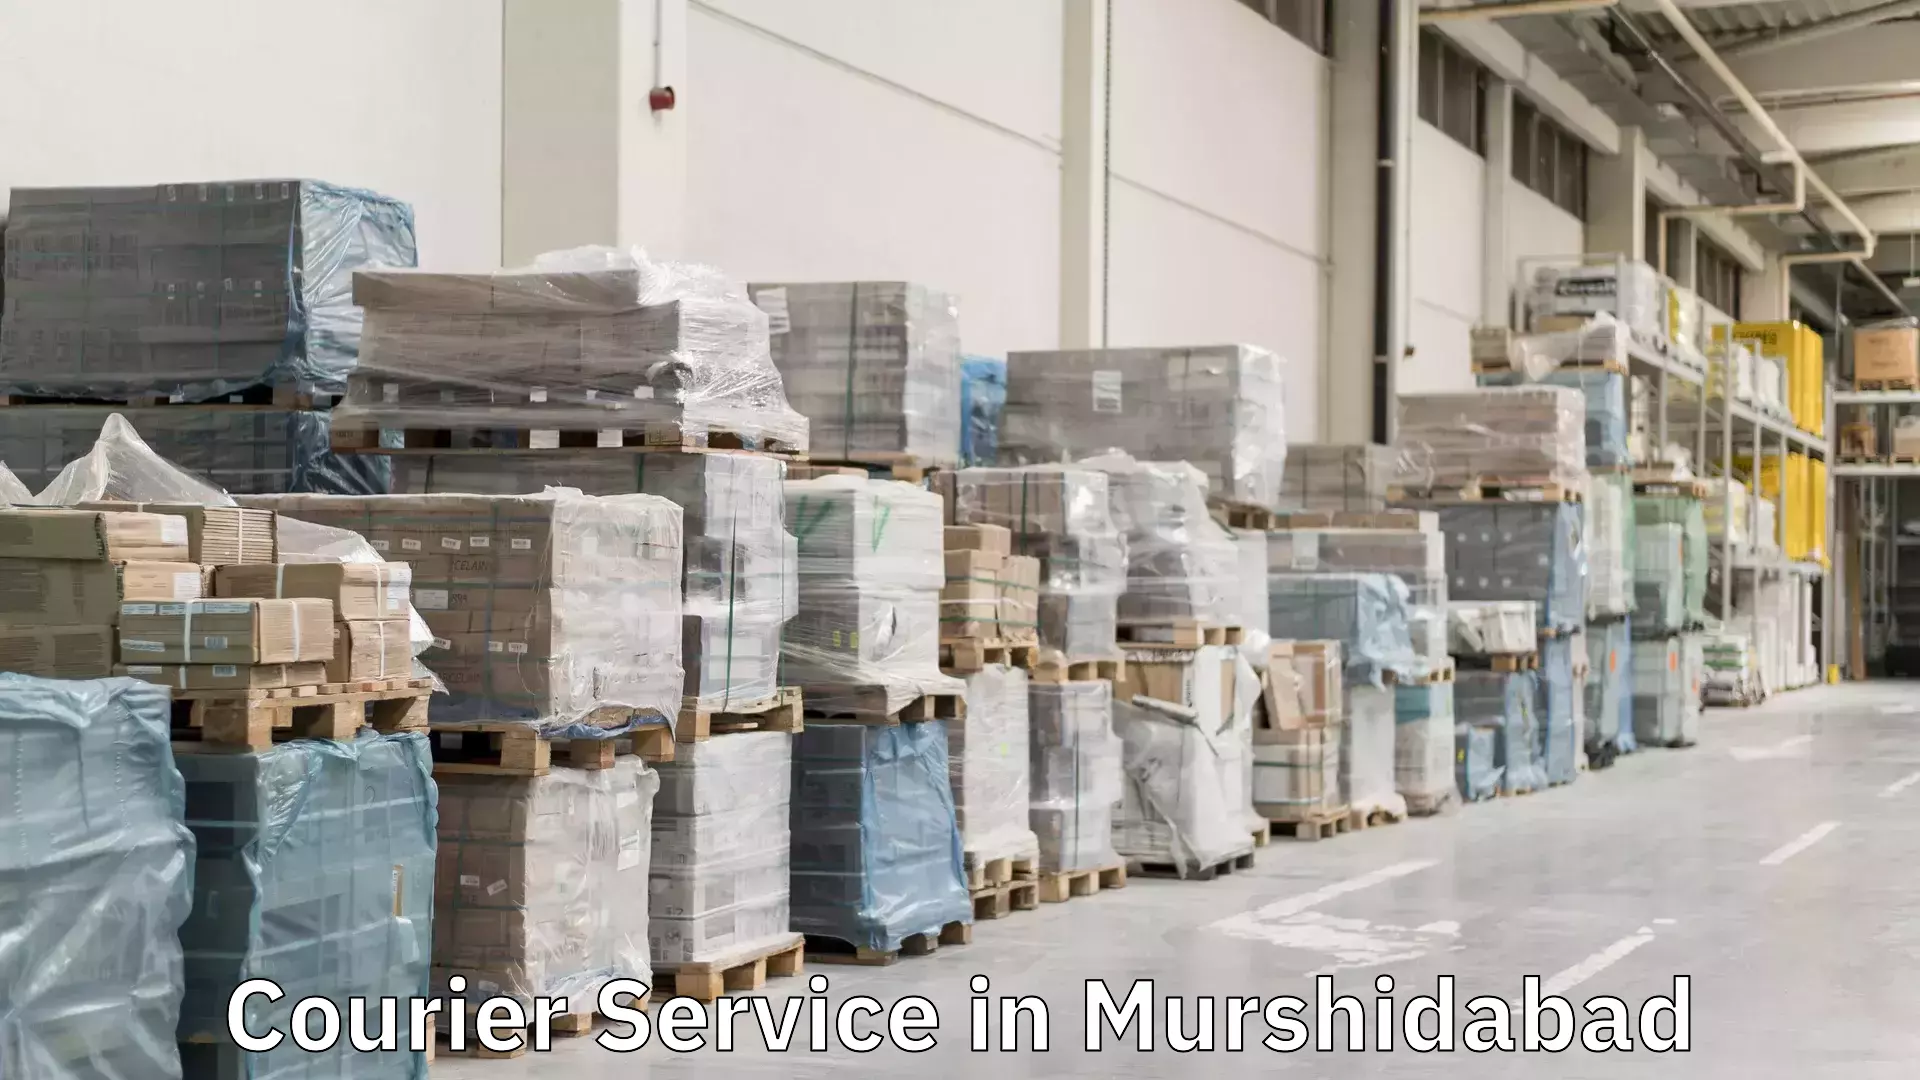 Efficient shipping operations in Murshidabad